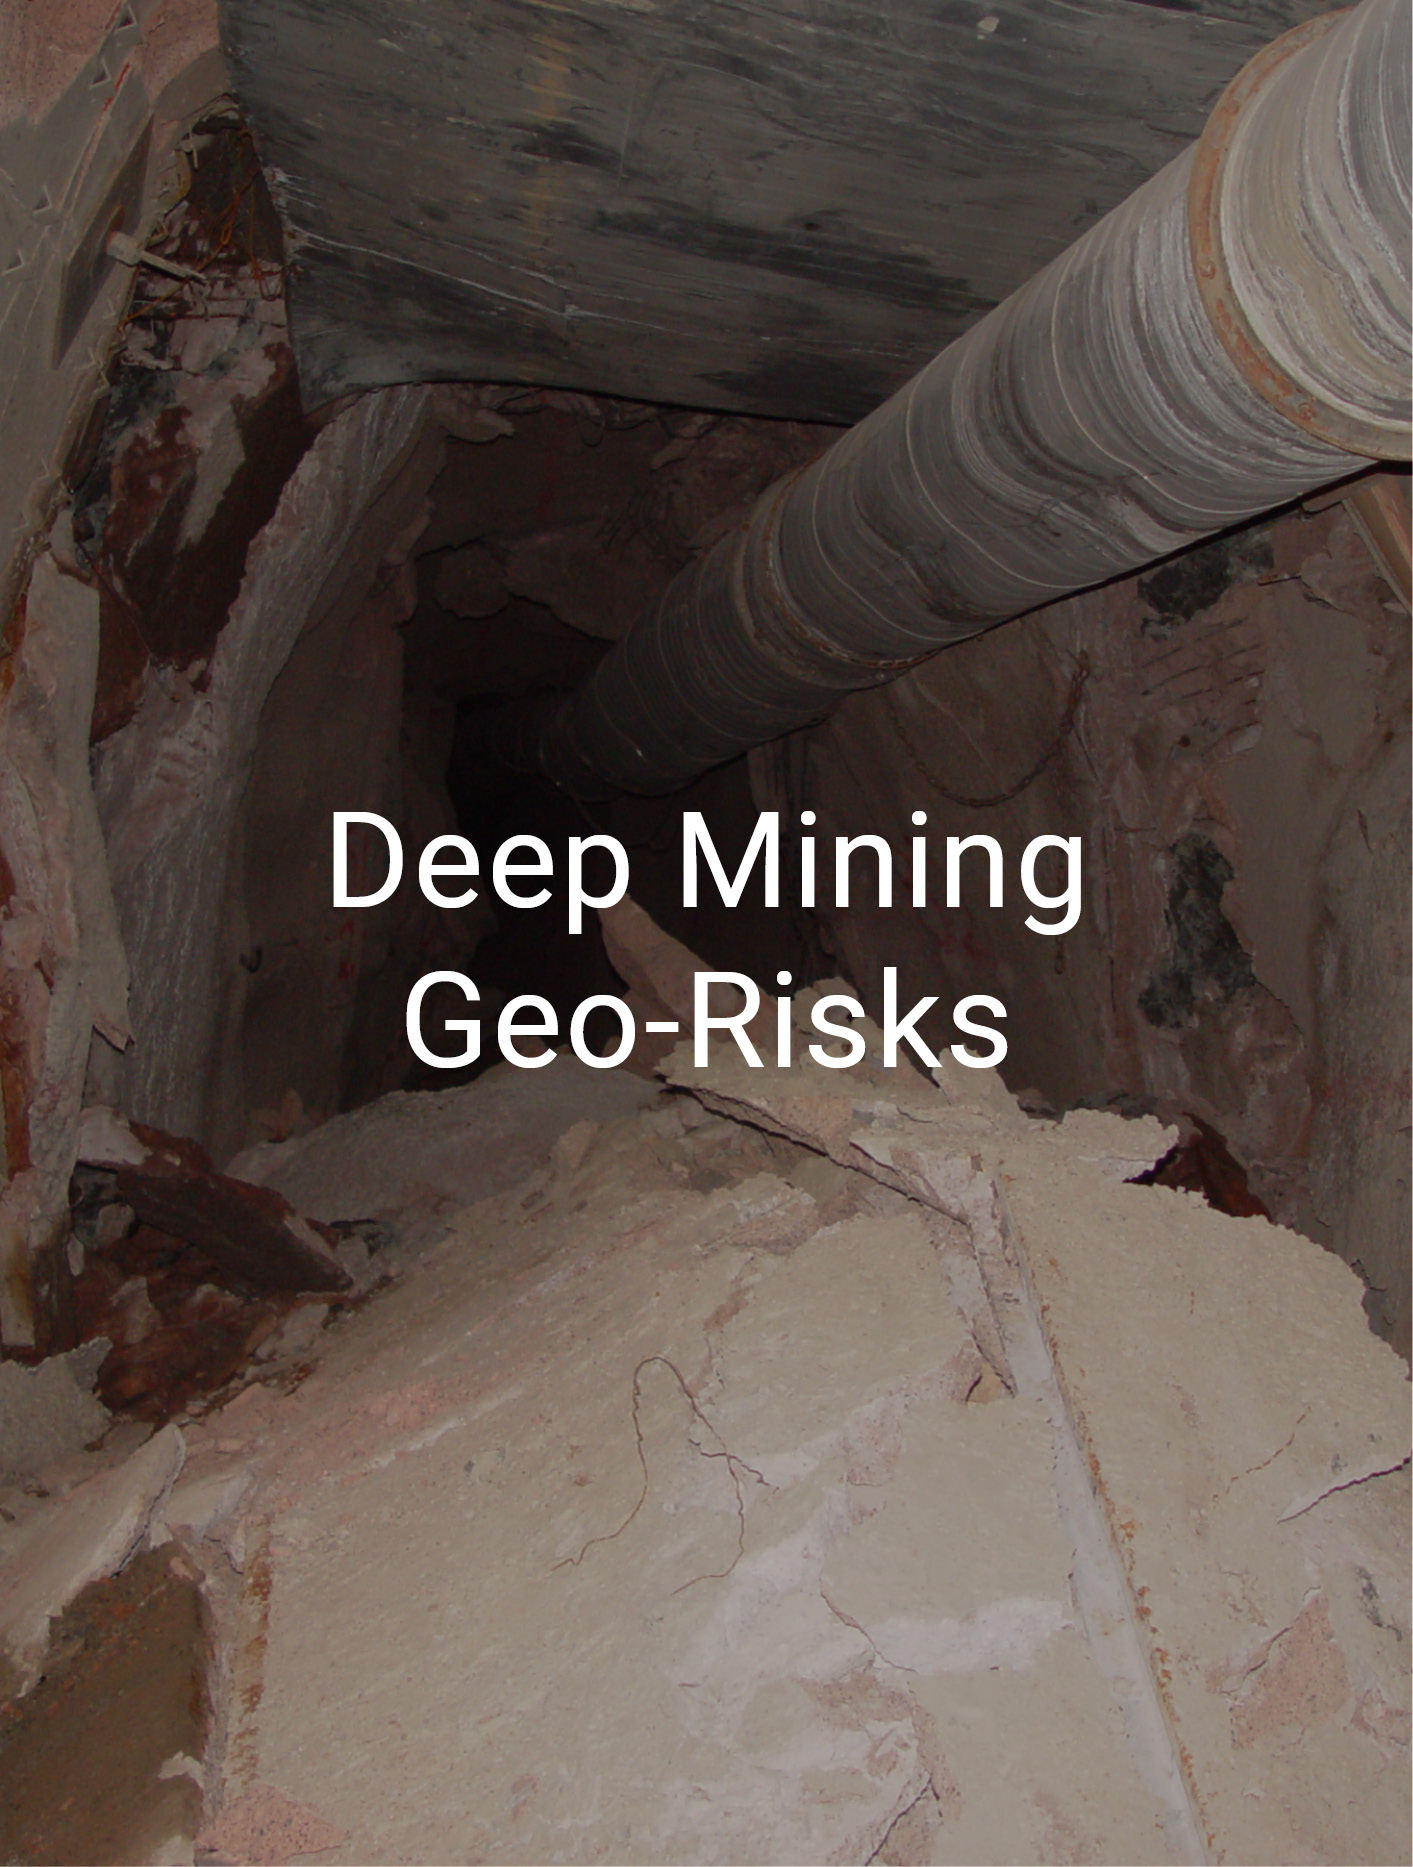 text 'Deep Mining Geo-Risks' over background of downward mineshaft